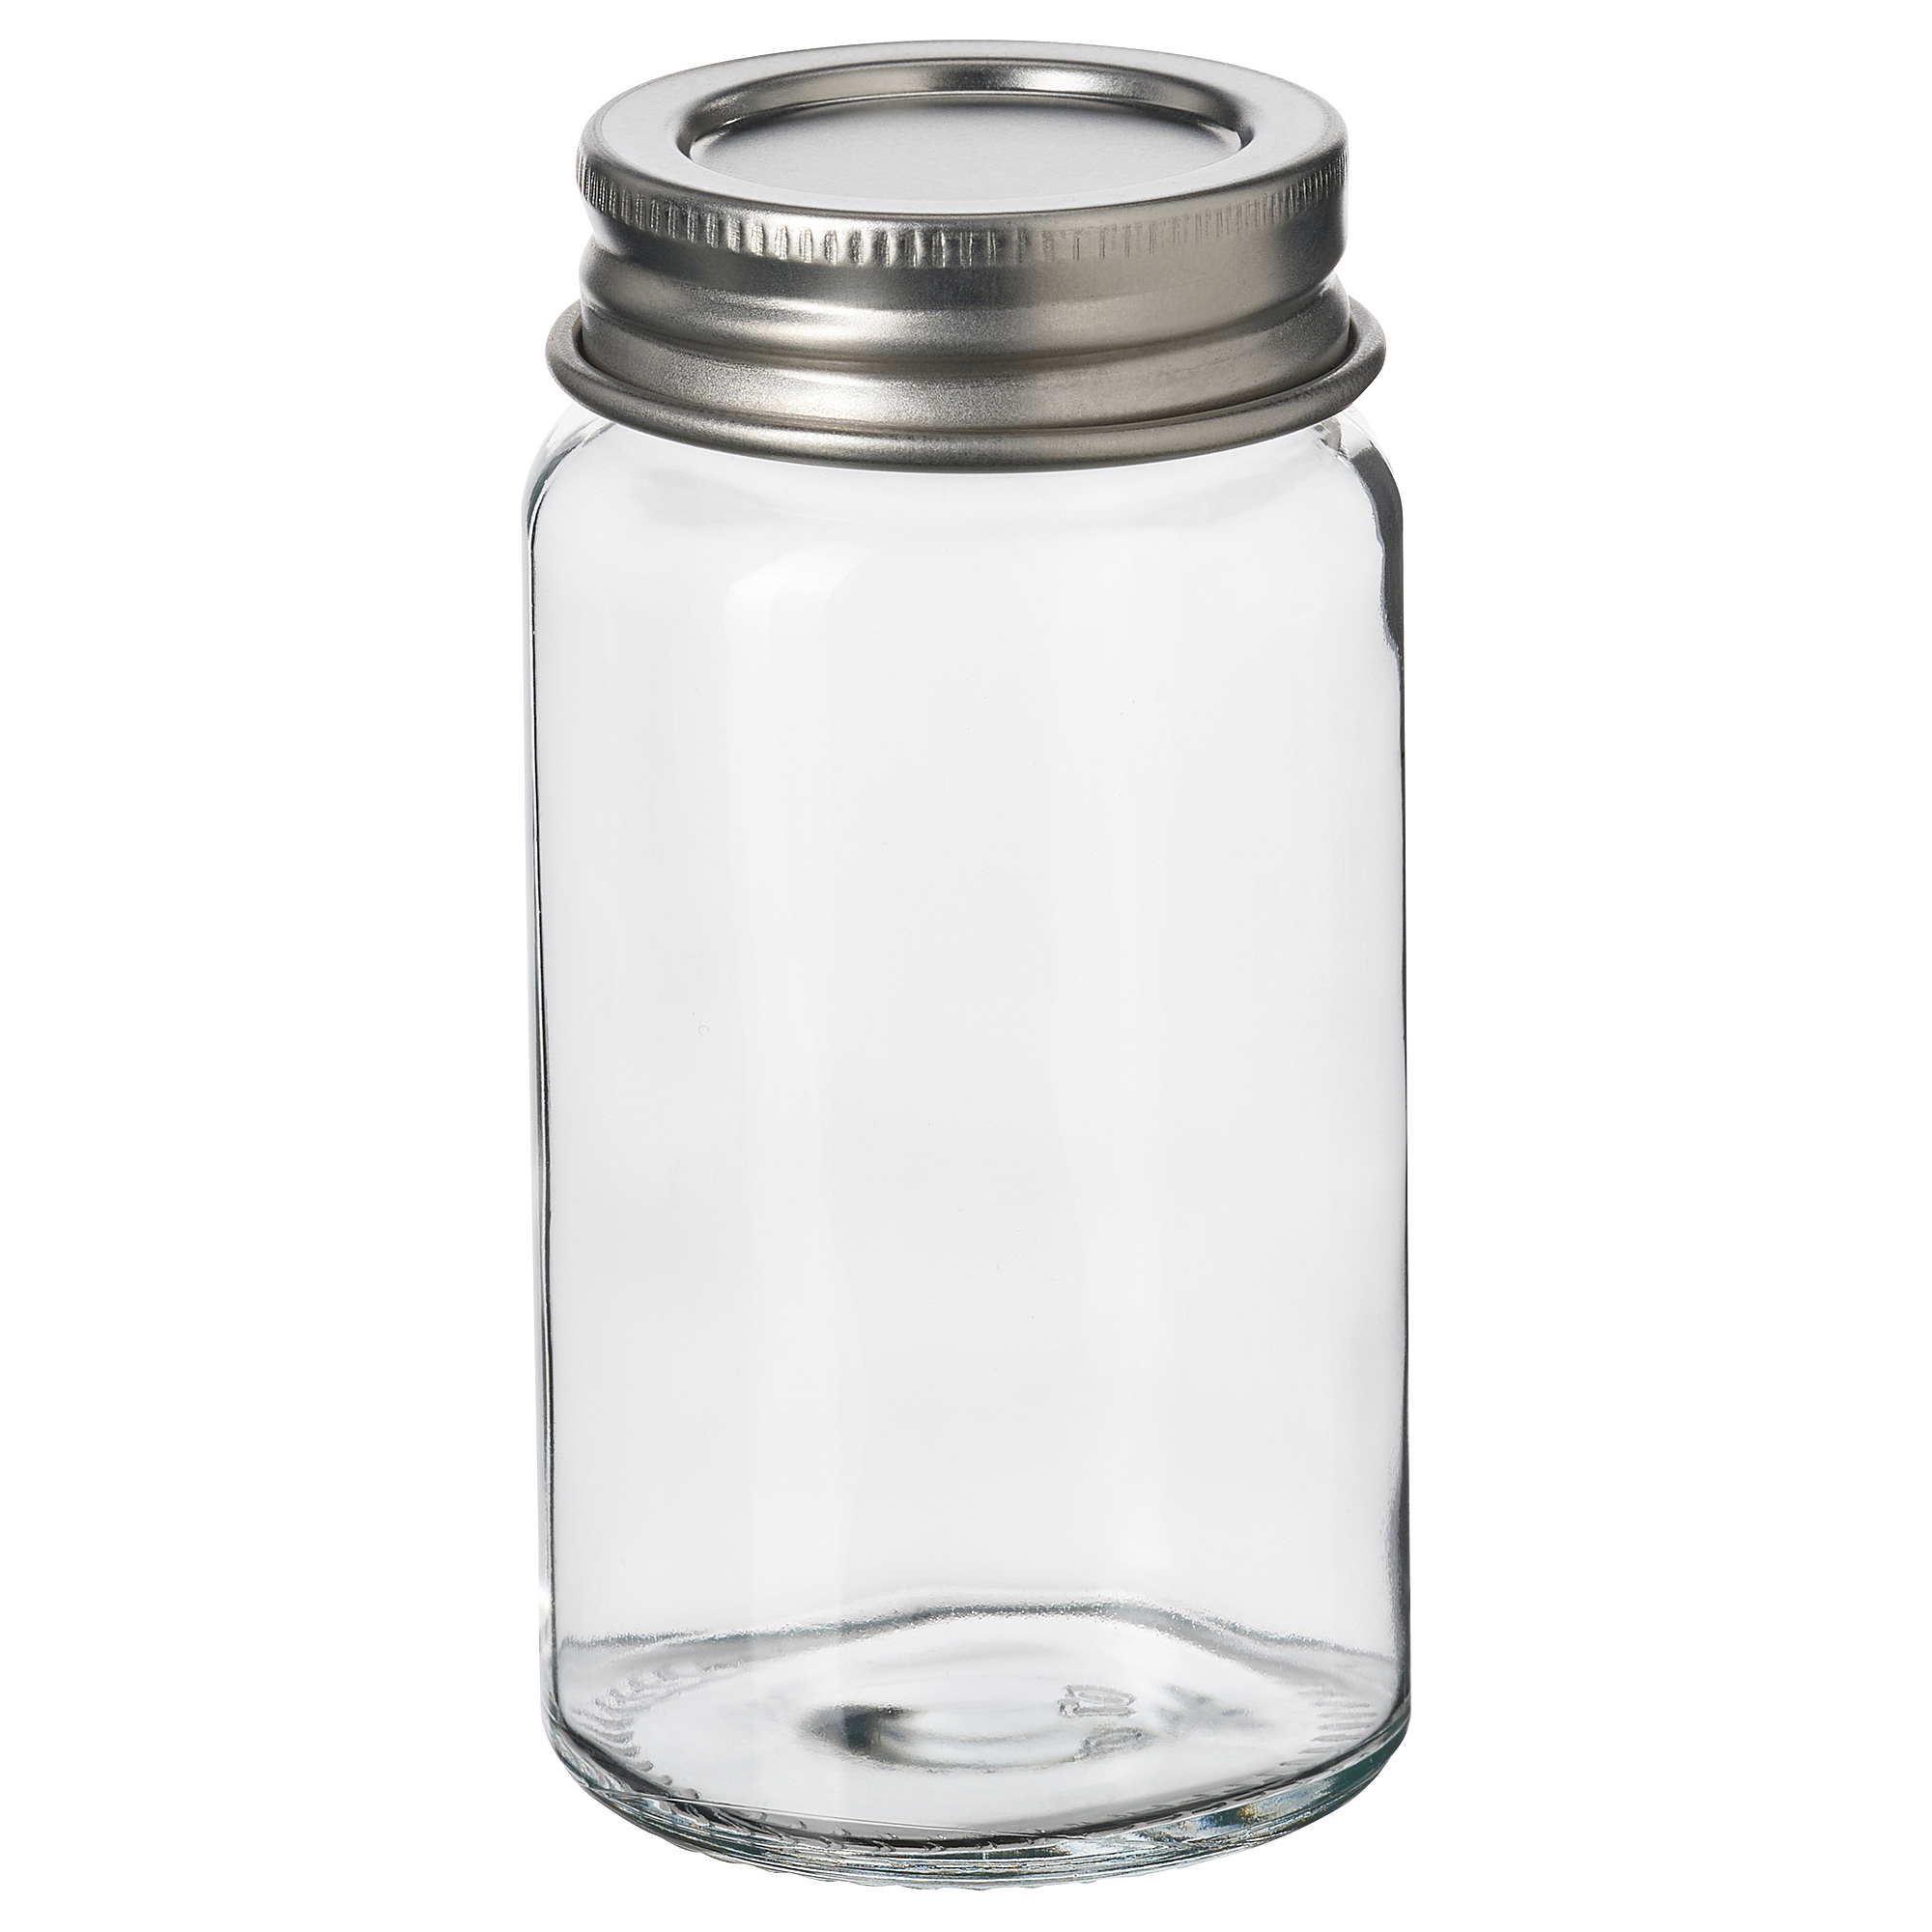 GULDFISK - spice jar, clear glass/stainless steel, 6 cl | IKEA 